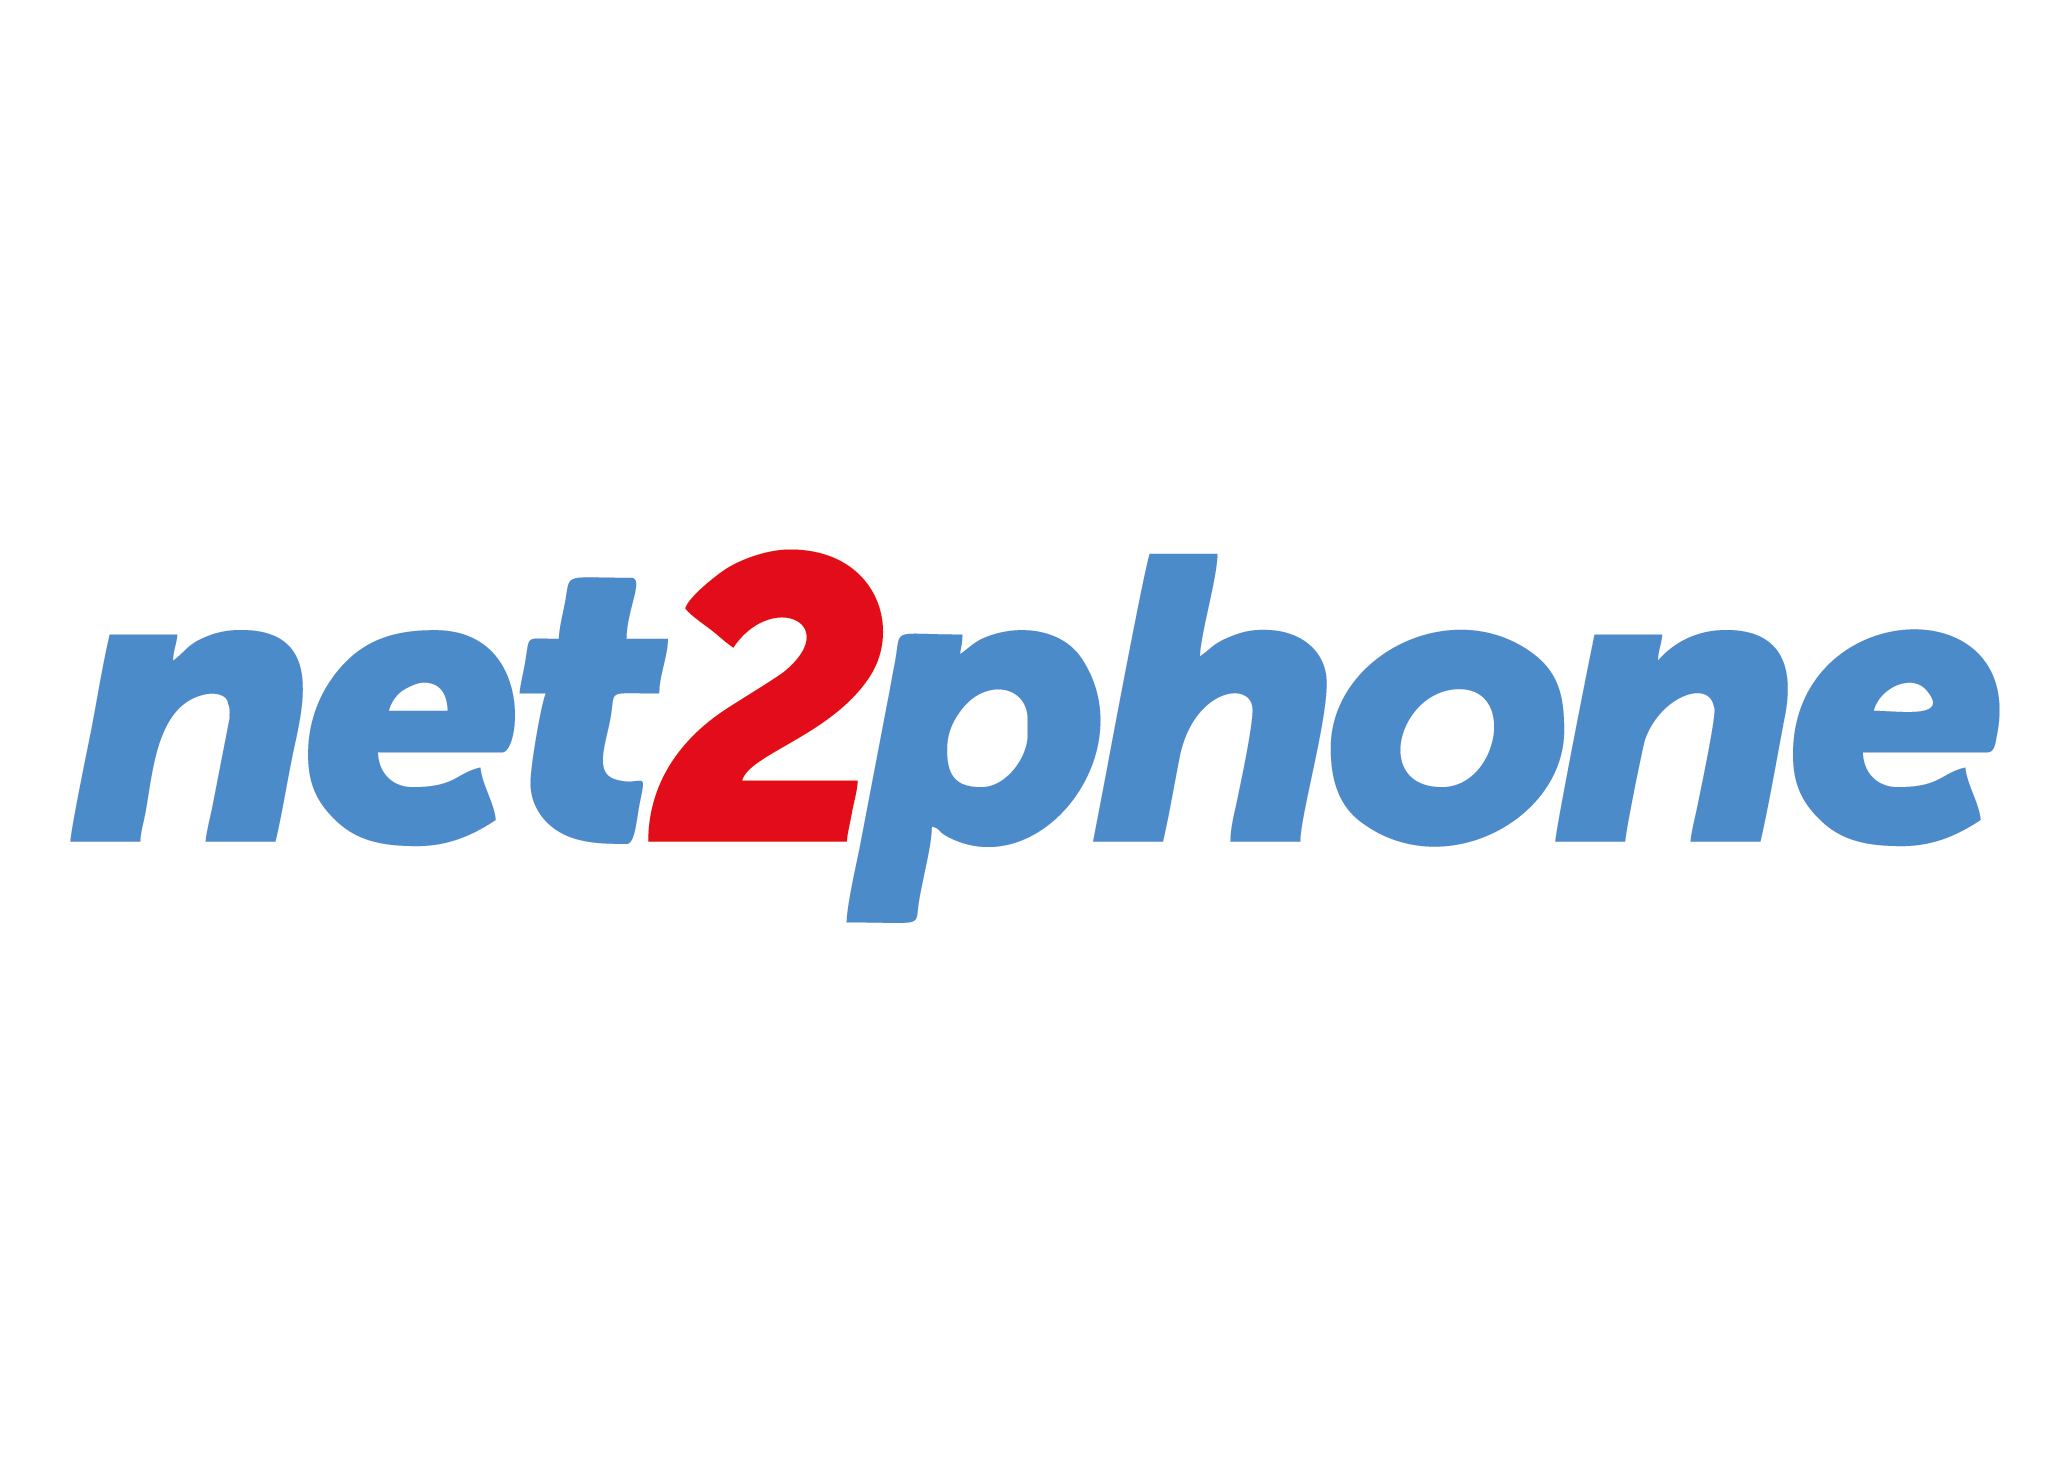 NET2PHONE_EXPORC23